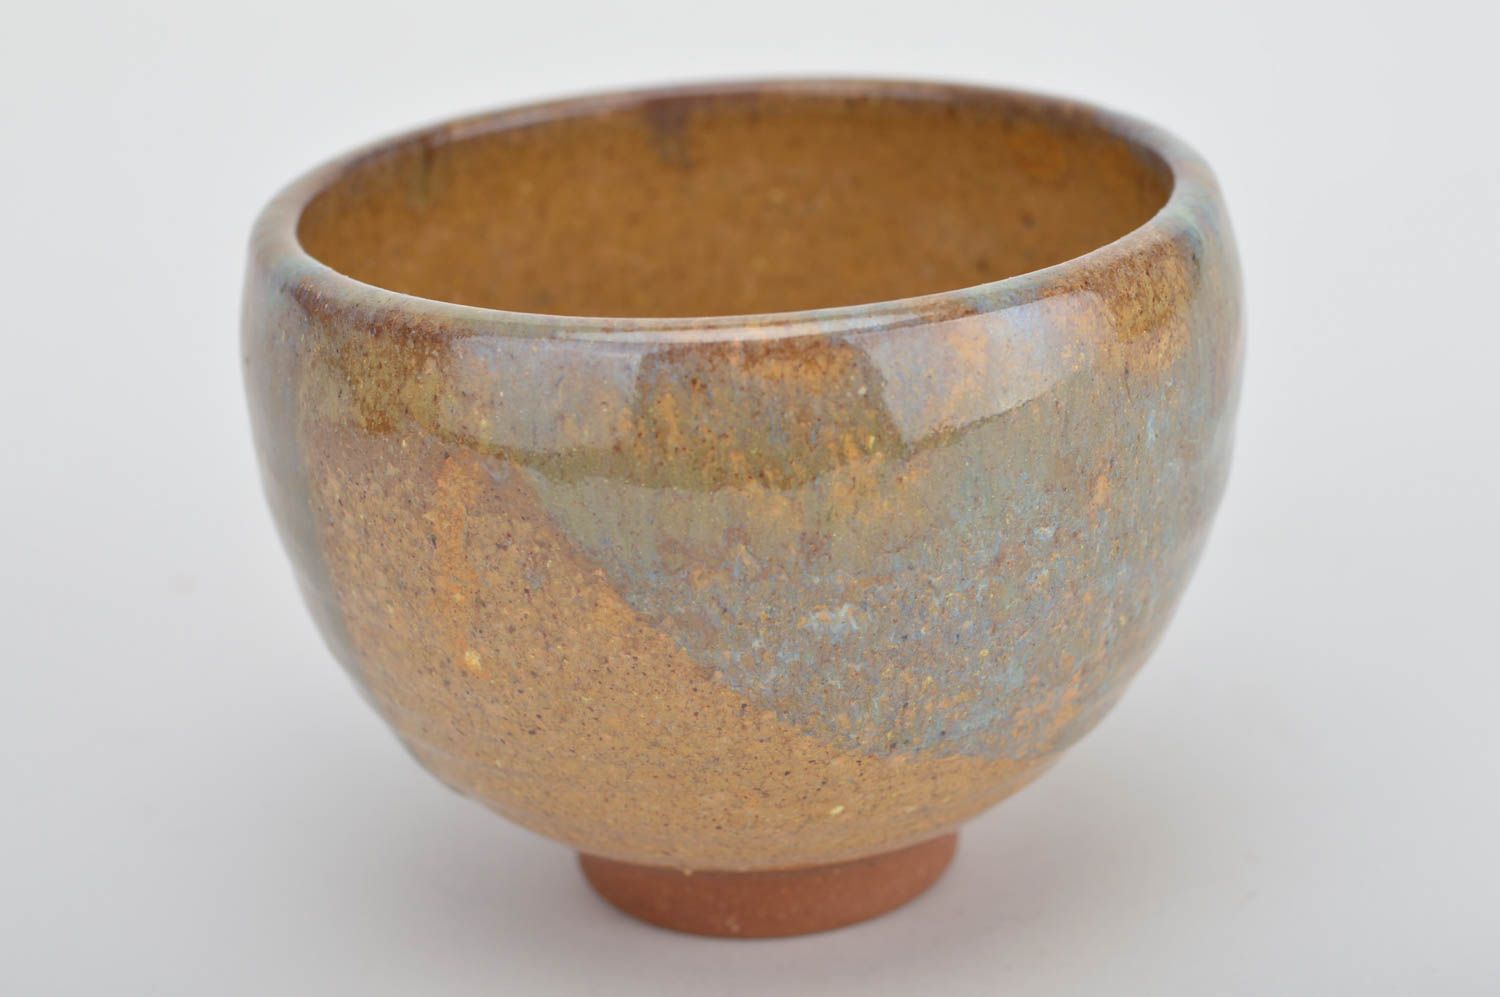 Handmade ceramic bowl serving bowl stoneware dinnerware ceramic art home decor photo 1